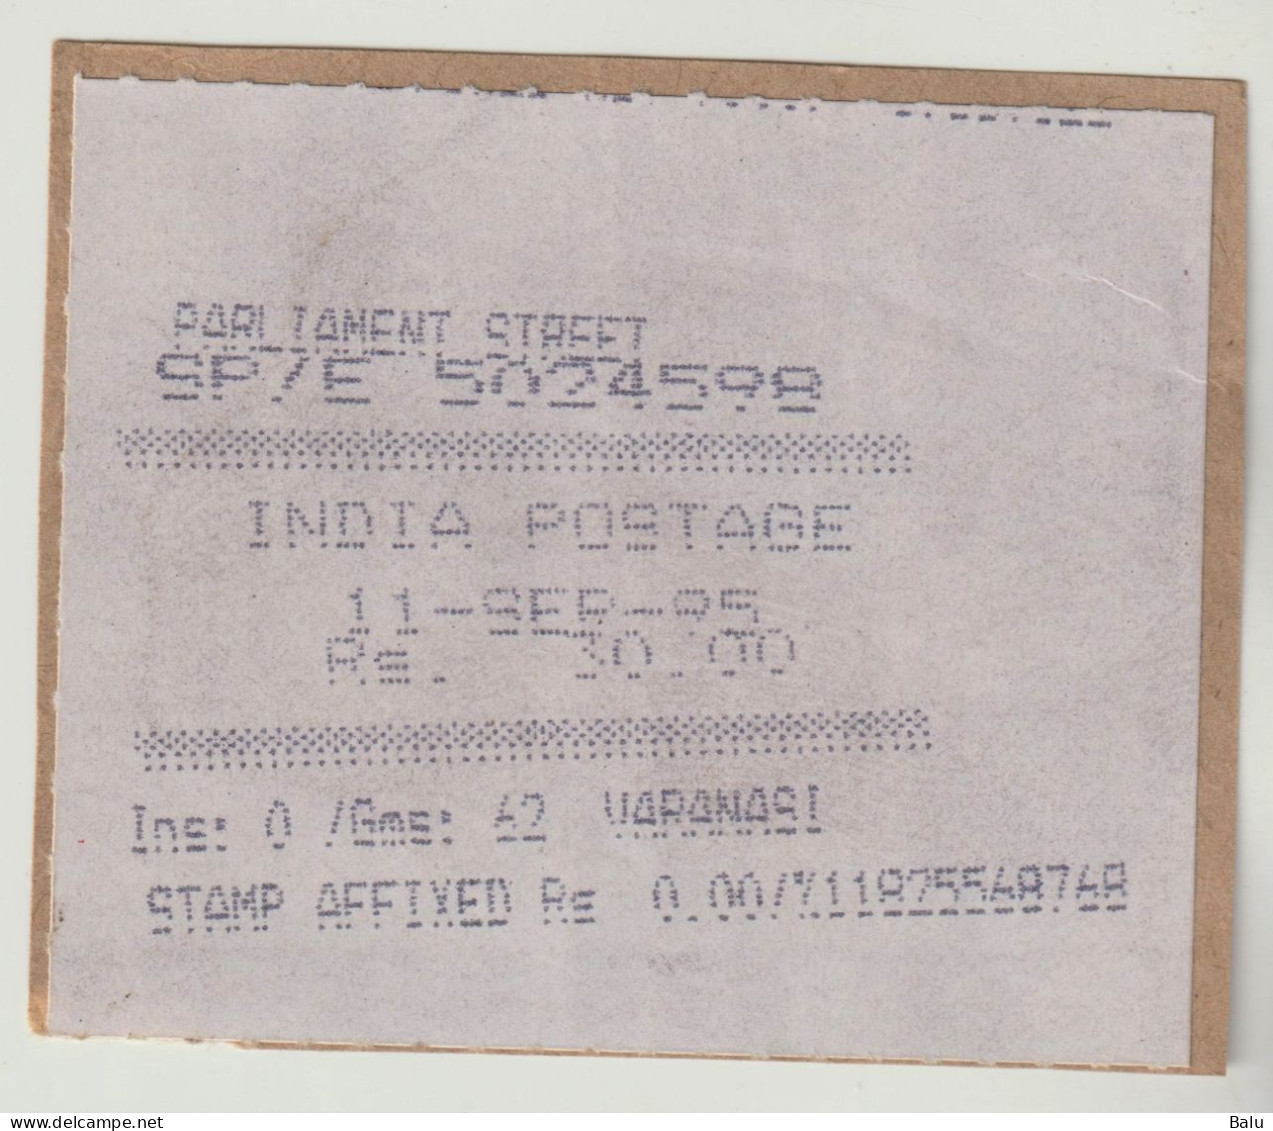 Indien India Postage Rs. 30.00 11-SEP-95 Parliament Street Varanasi "STAMP AFFIXED Rs" Auf Fragment - Gebruikt